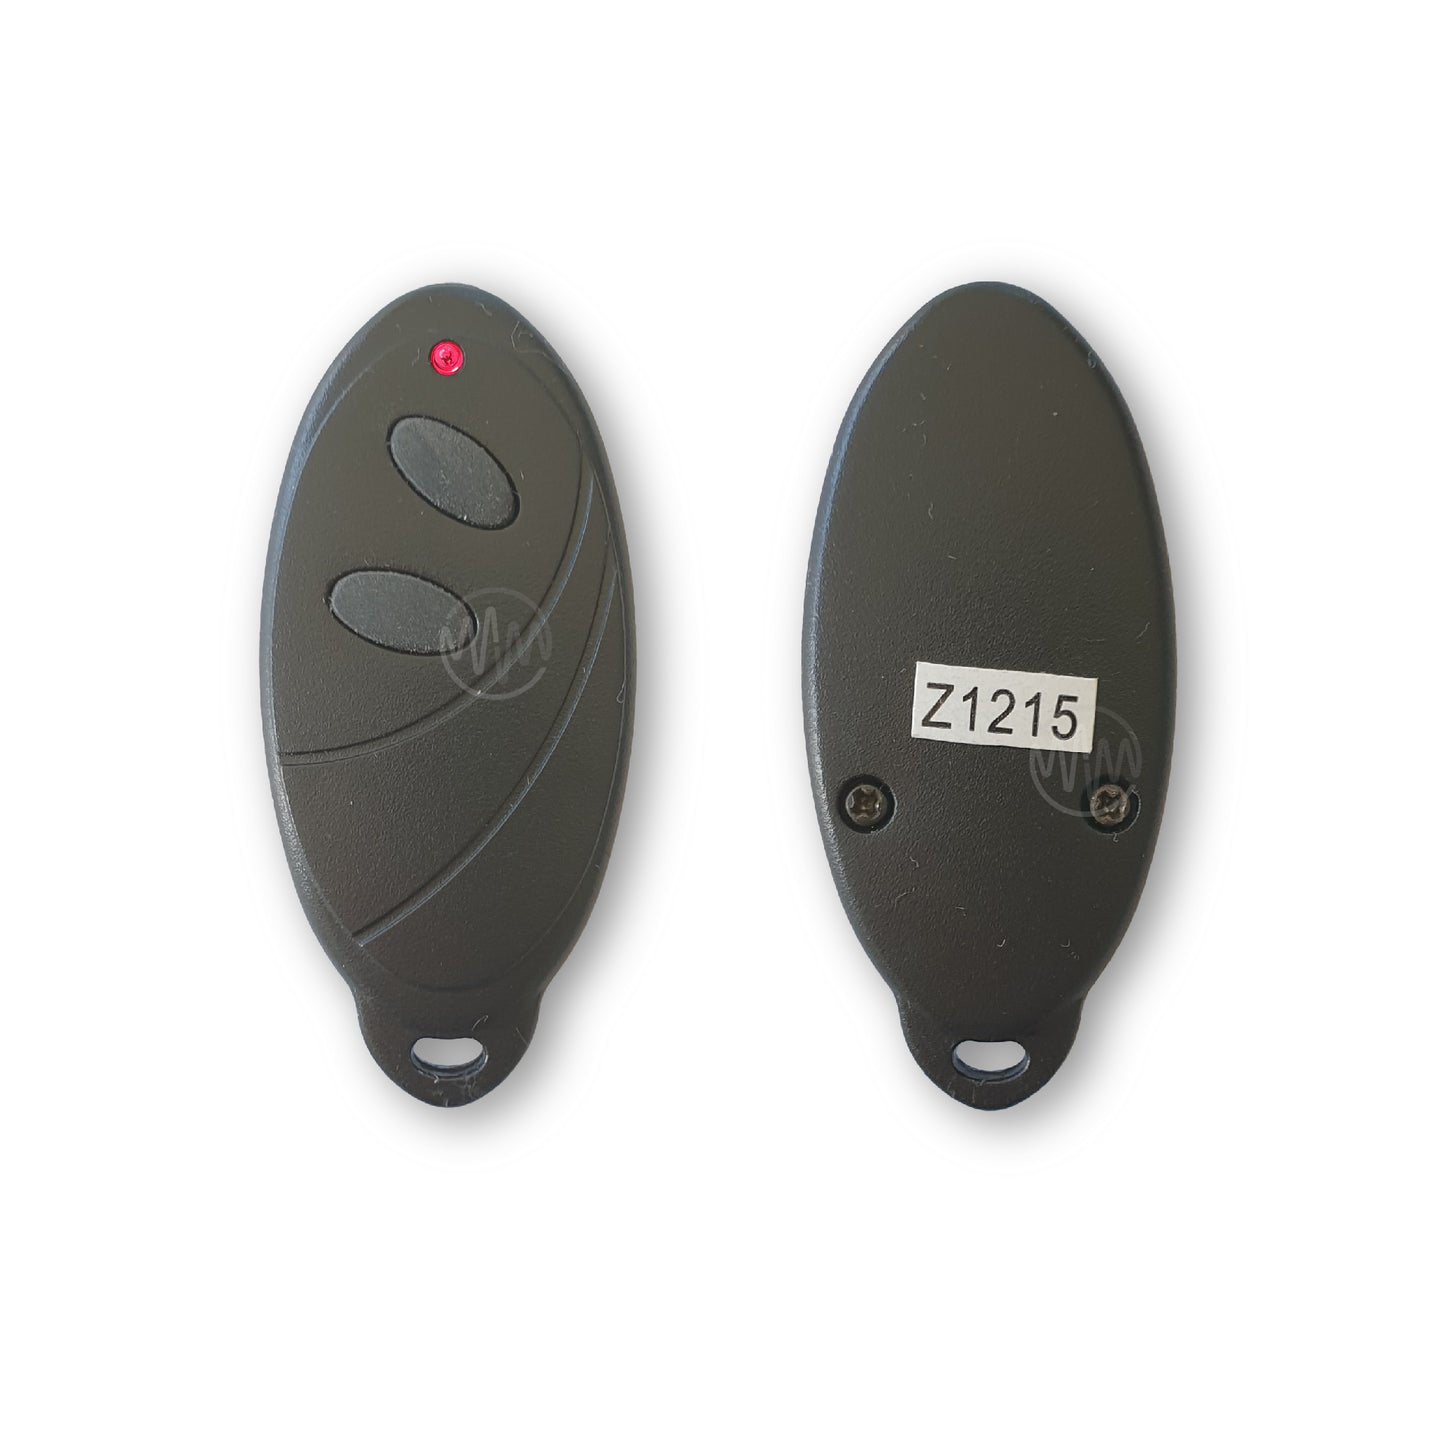 AVS TX2-10 Surfboard Car Alarm Remote